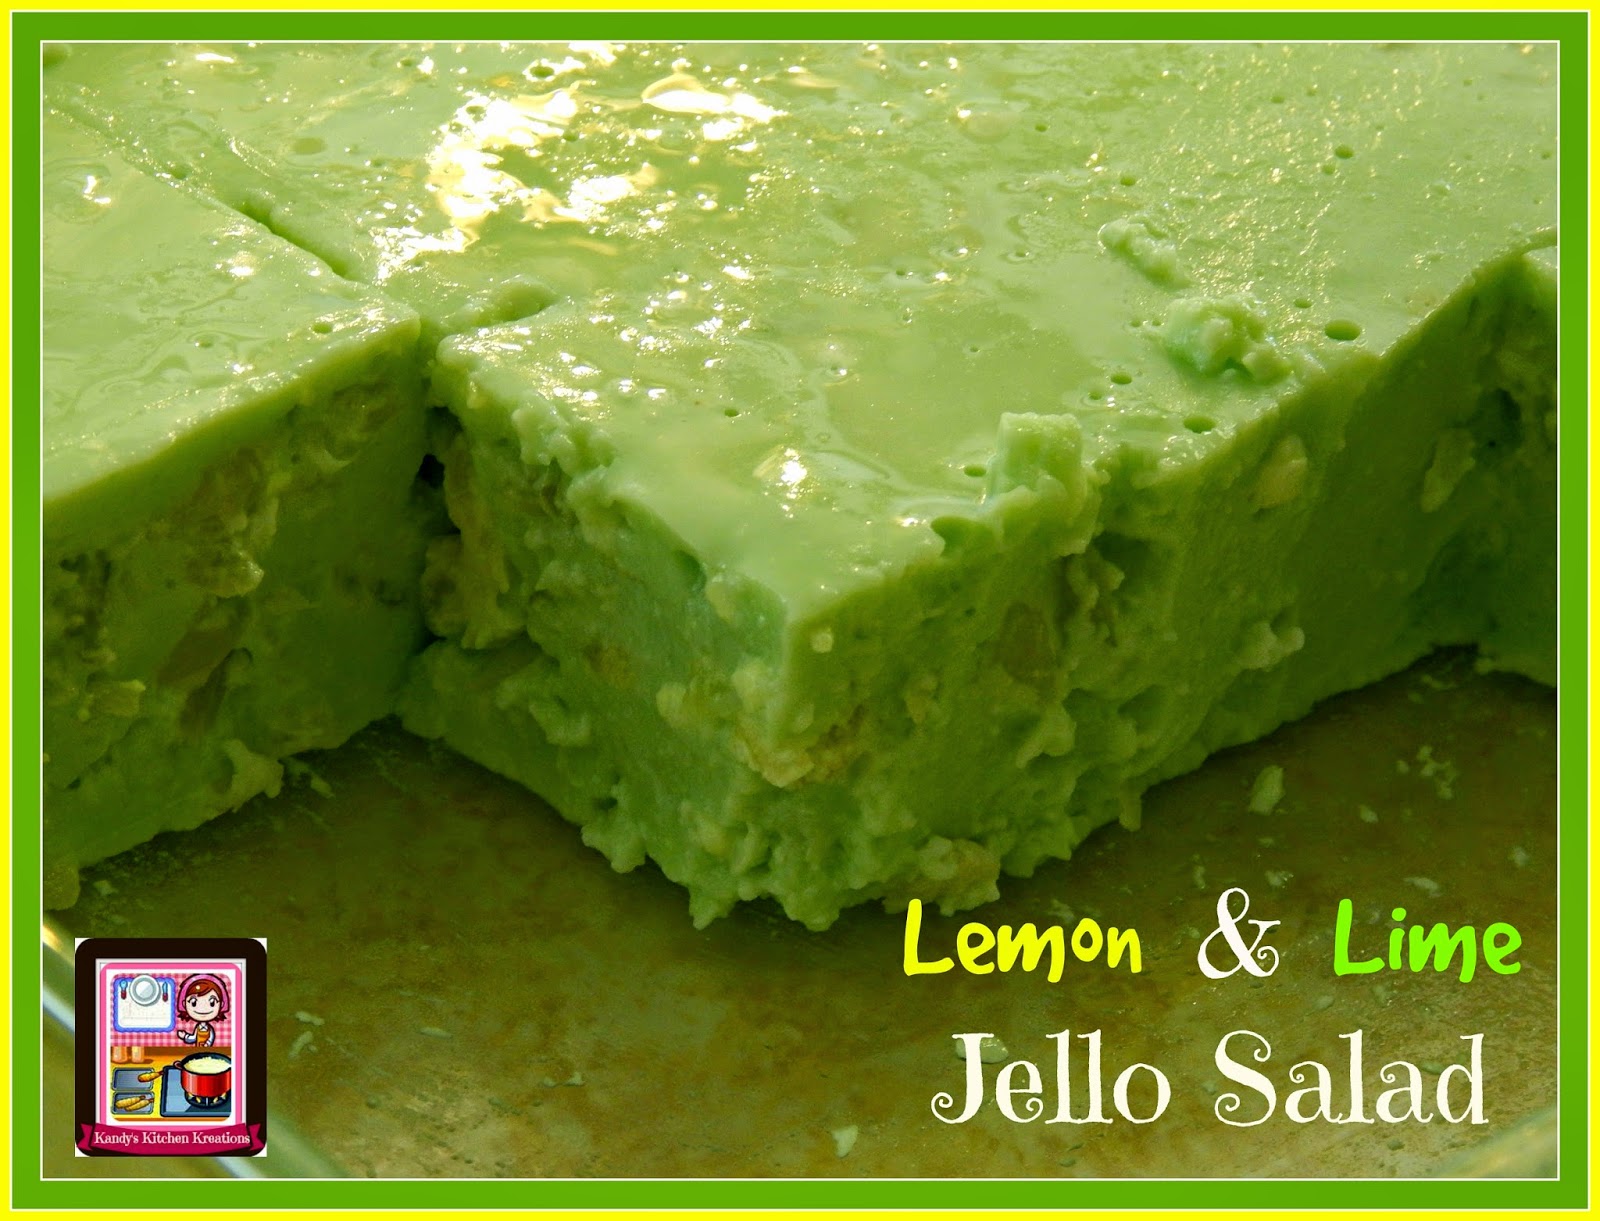 Kandy S Kitchen Kreations Lemon Lime Jello Salad